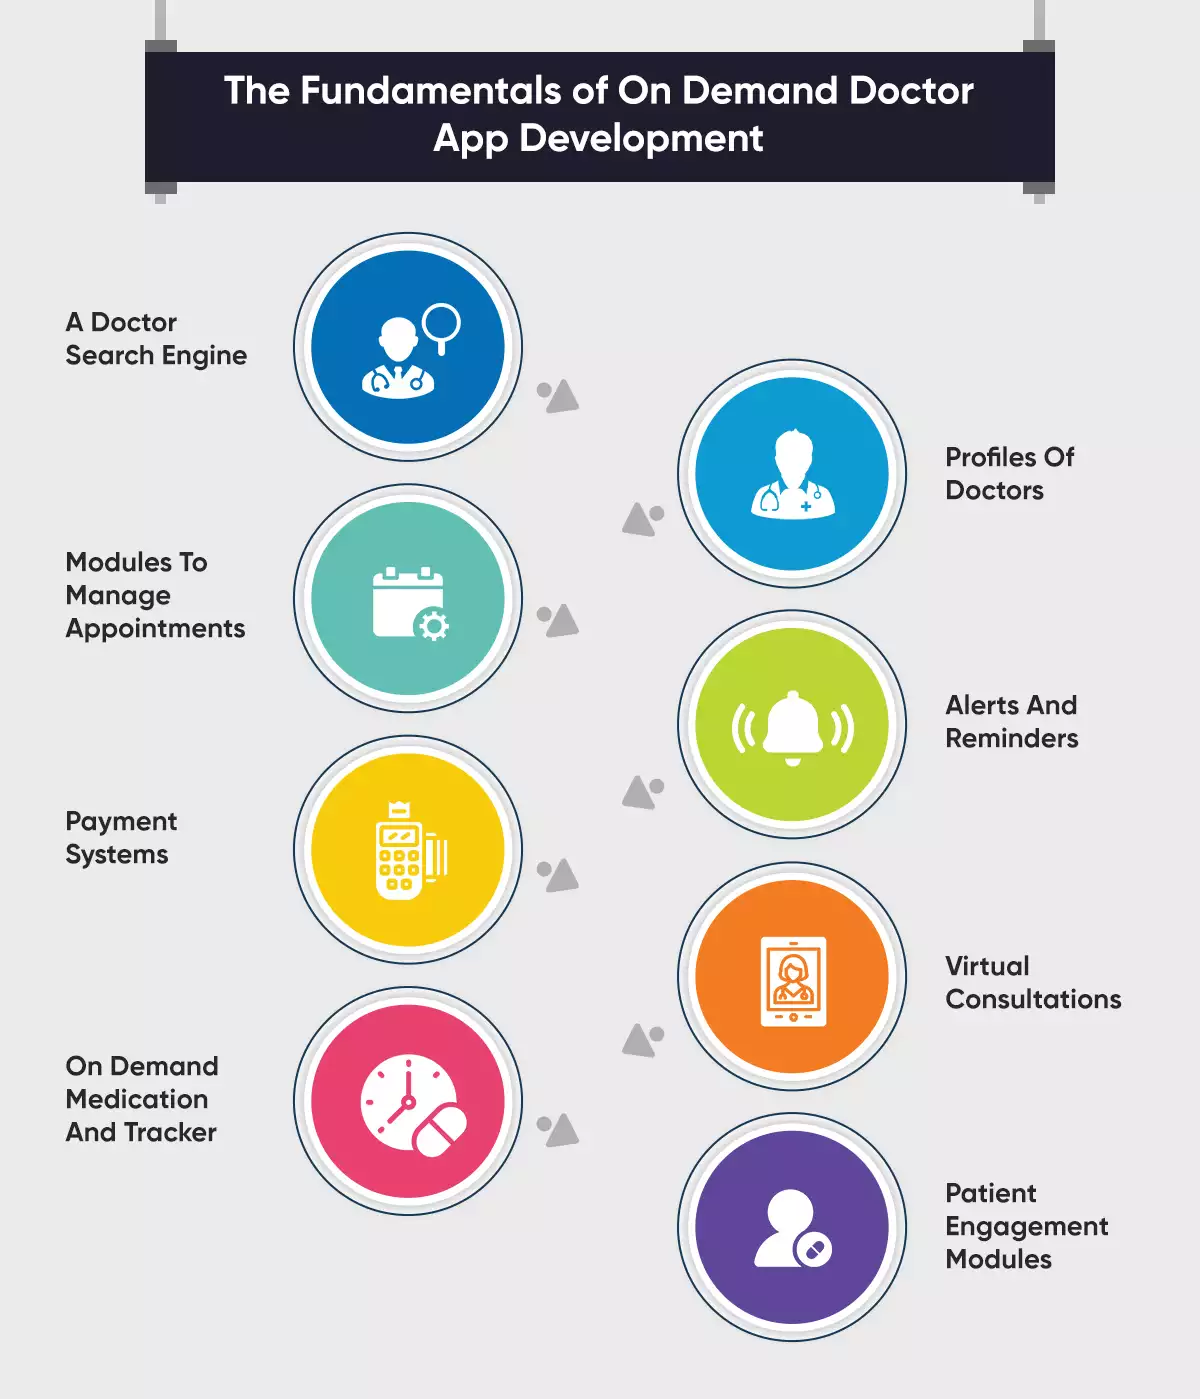 The Fundamentals of On Demand Doctor App Development